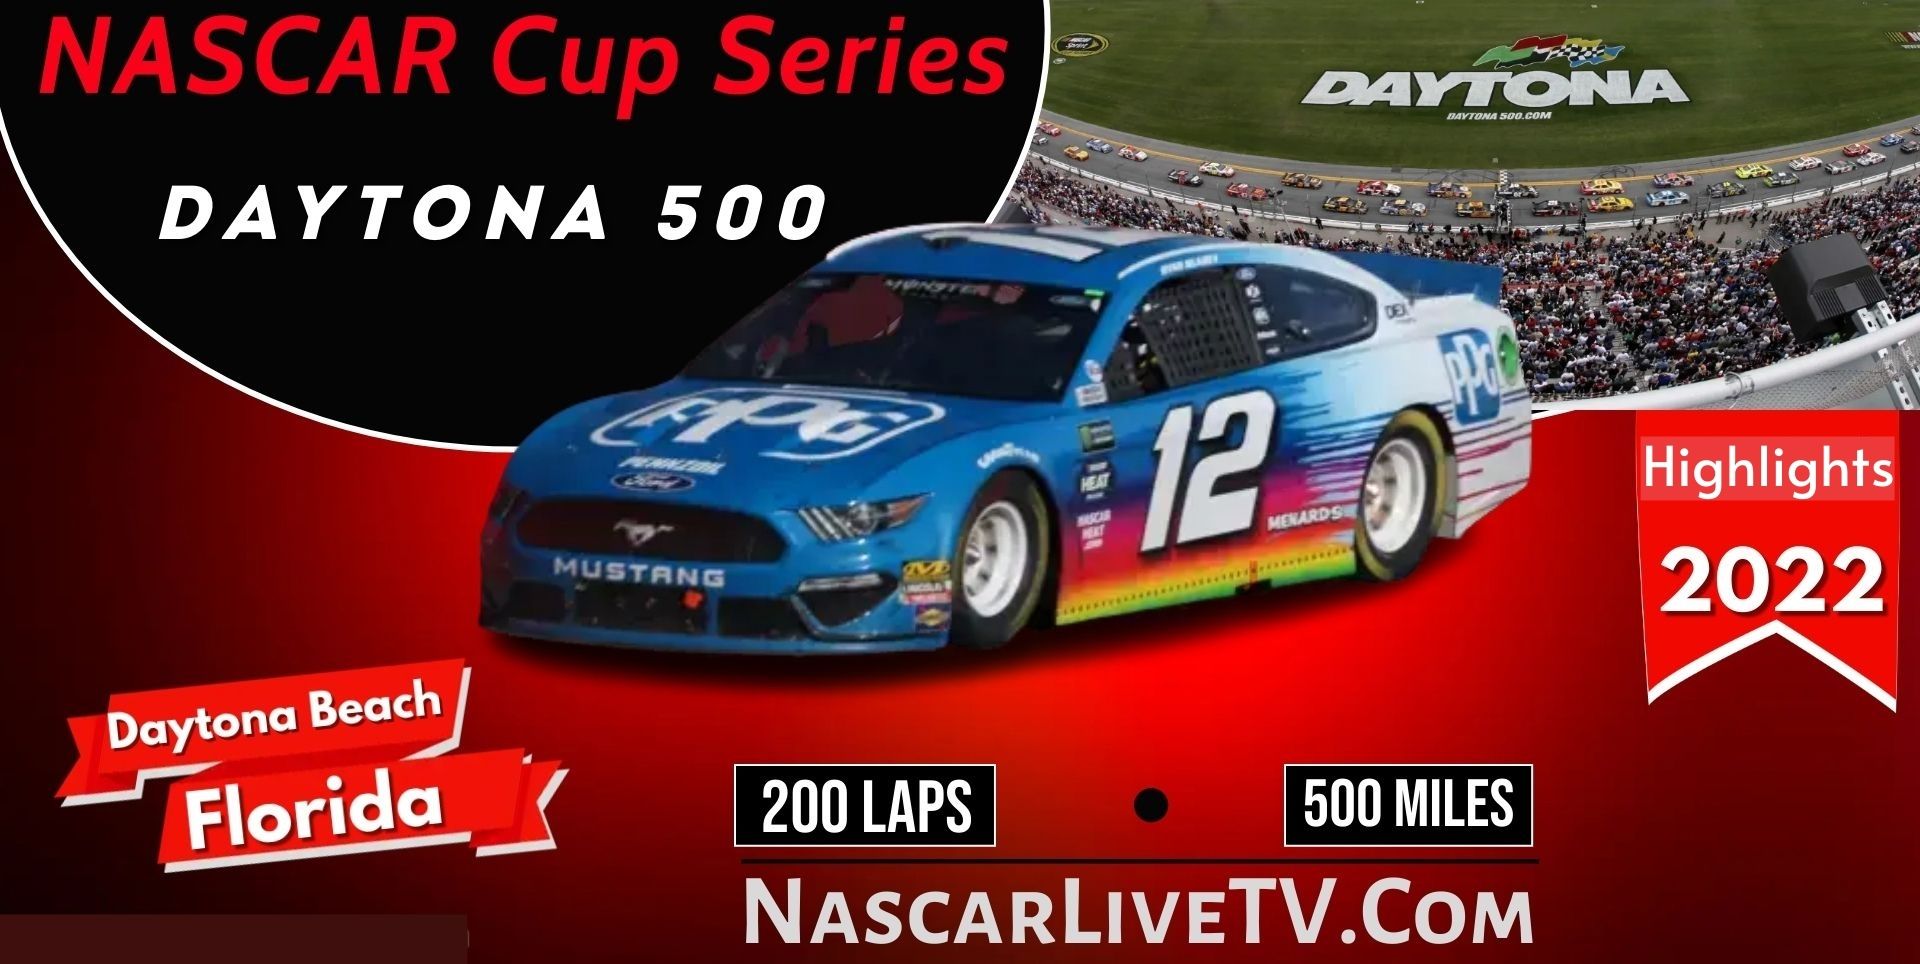 Daytona 500 Highlights Nascar Cup Series 2022